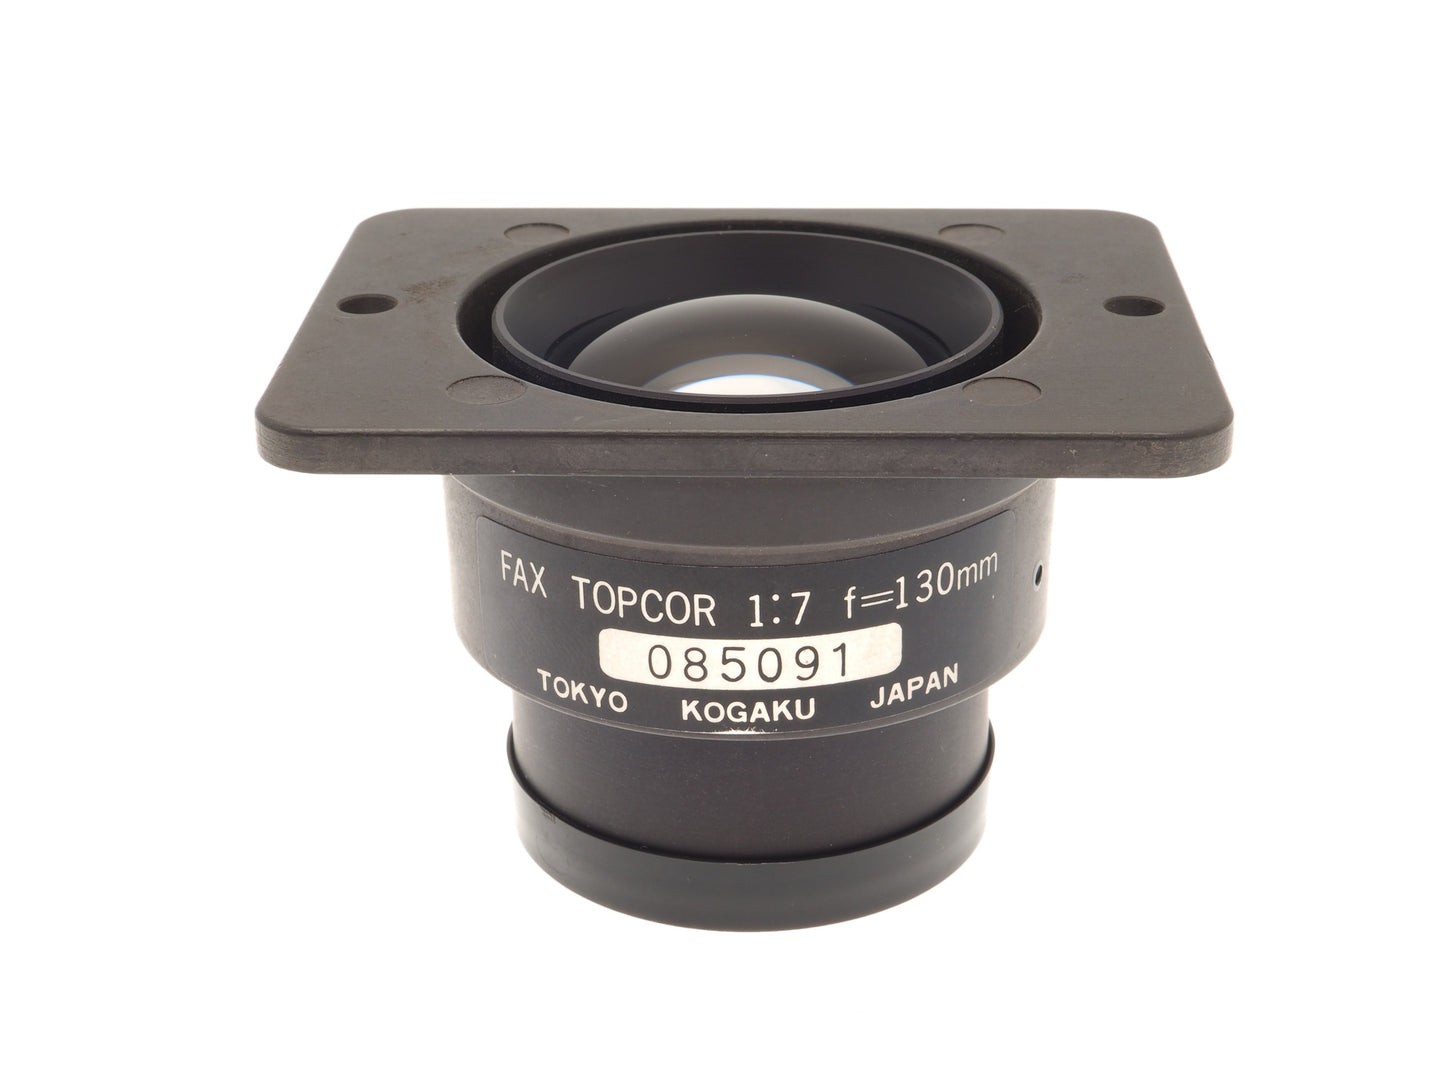 Topcon 130mm f7 Fax - Lens